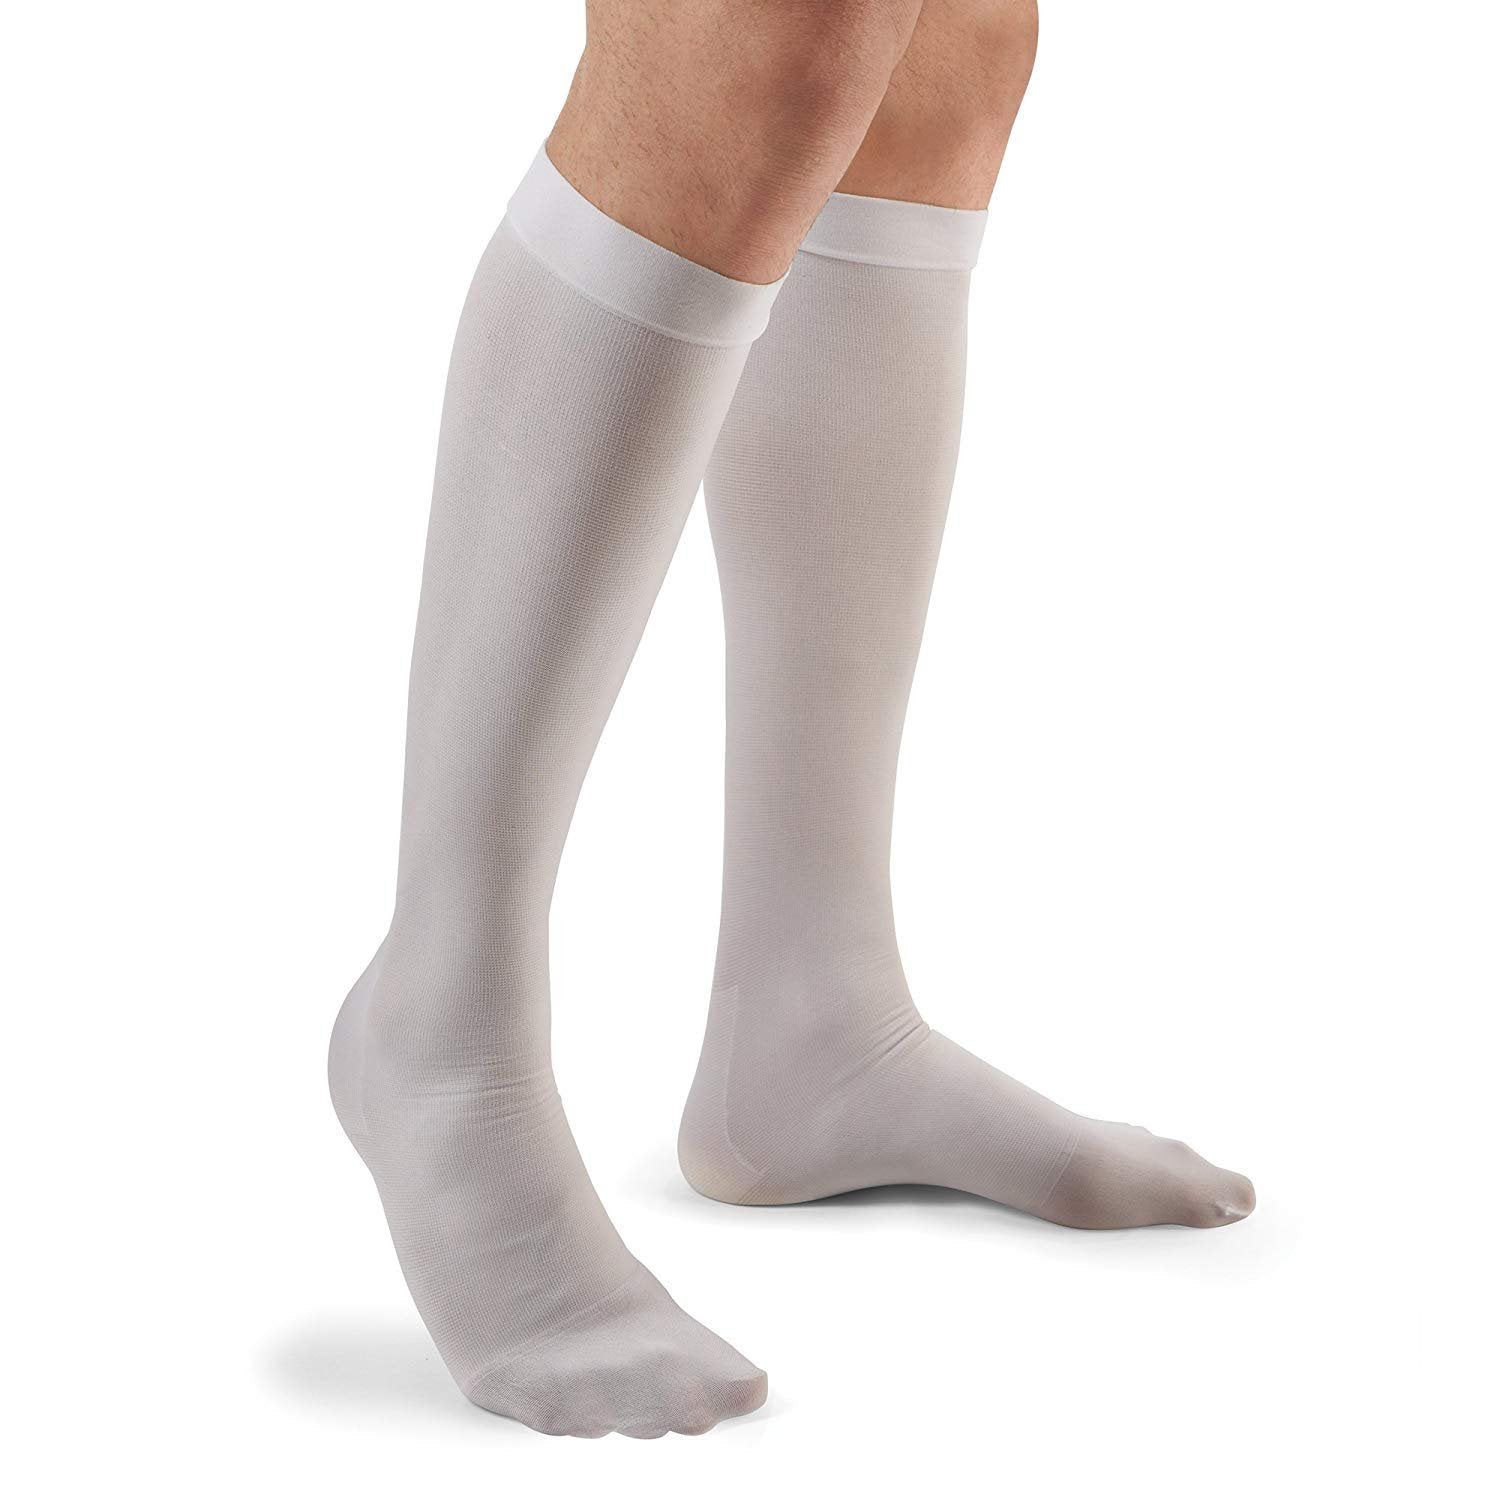 Anti-embolism Stocking 3M™ Futuro™ Knee High Large / Regular White Closed Toe